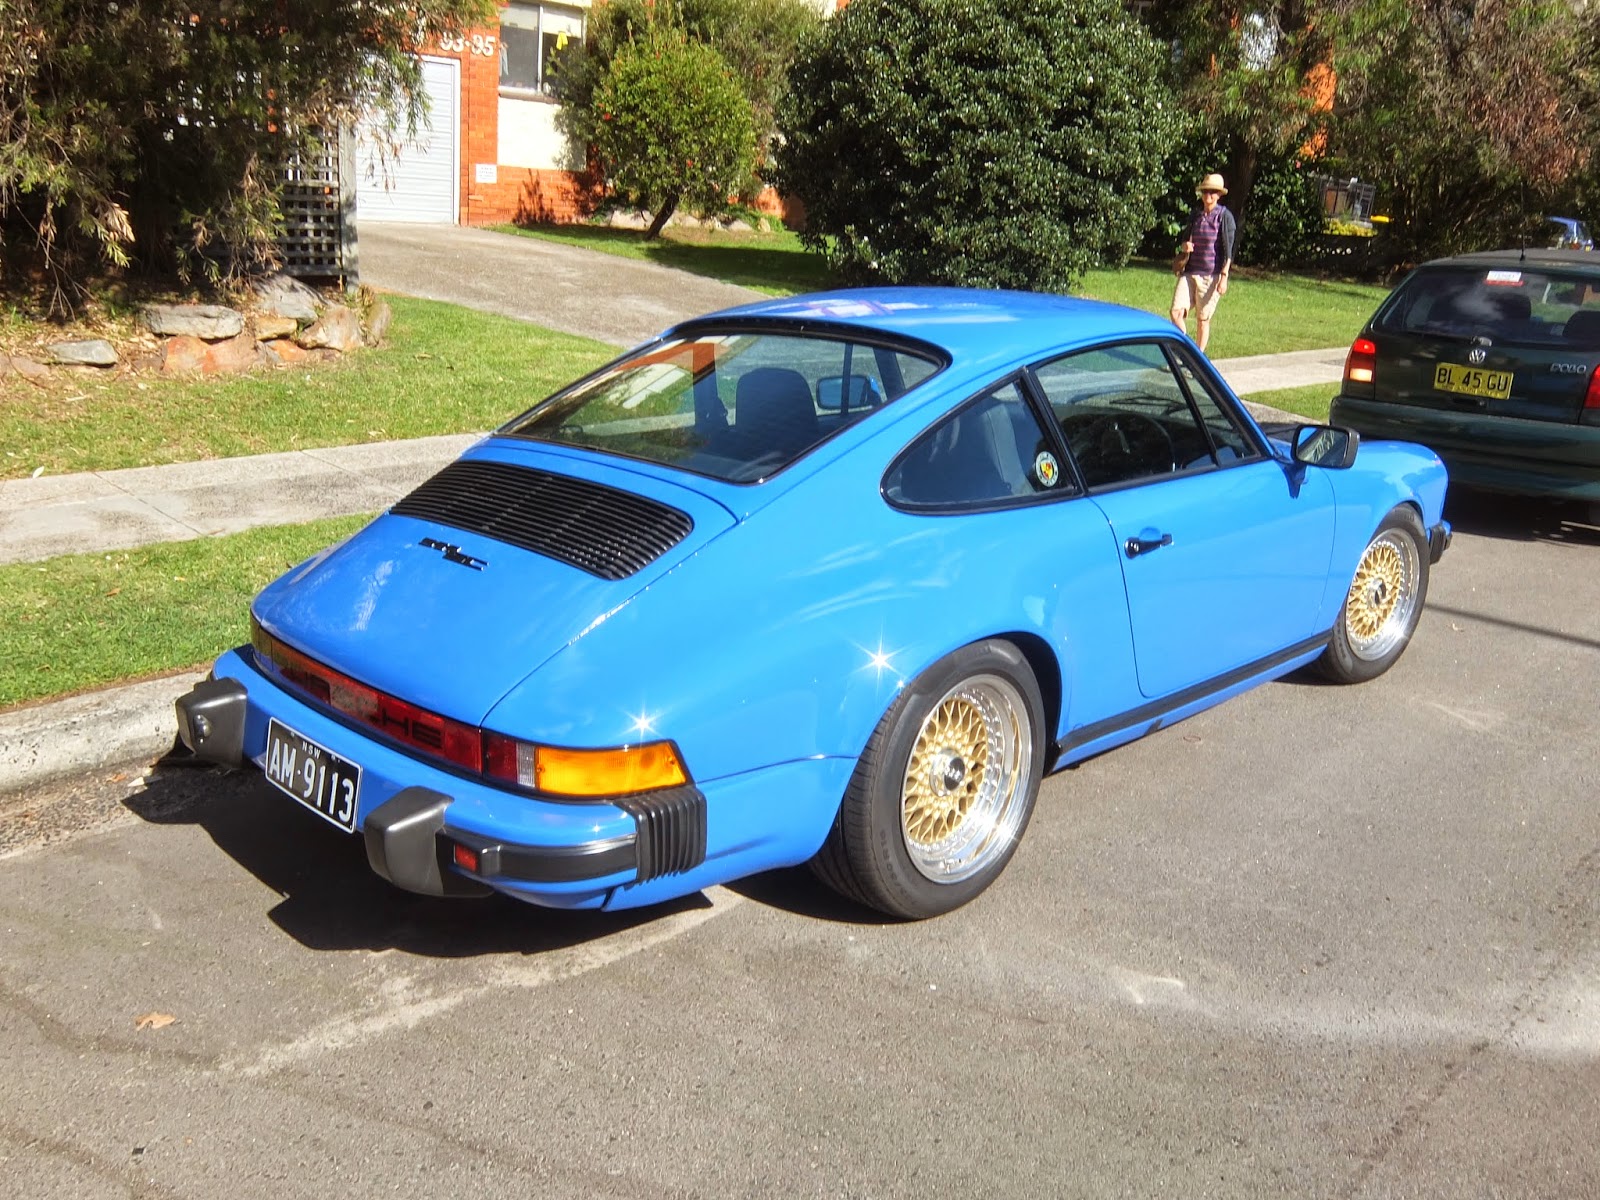 Aussie Old Parked Cars: 1978 Porsche 911 SC Coupe